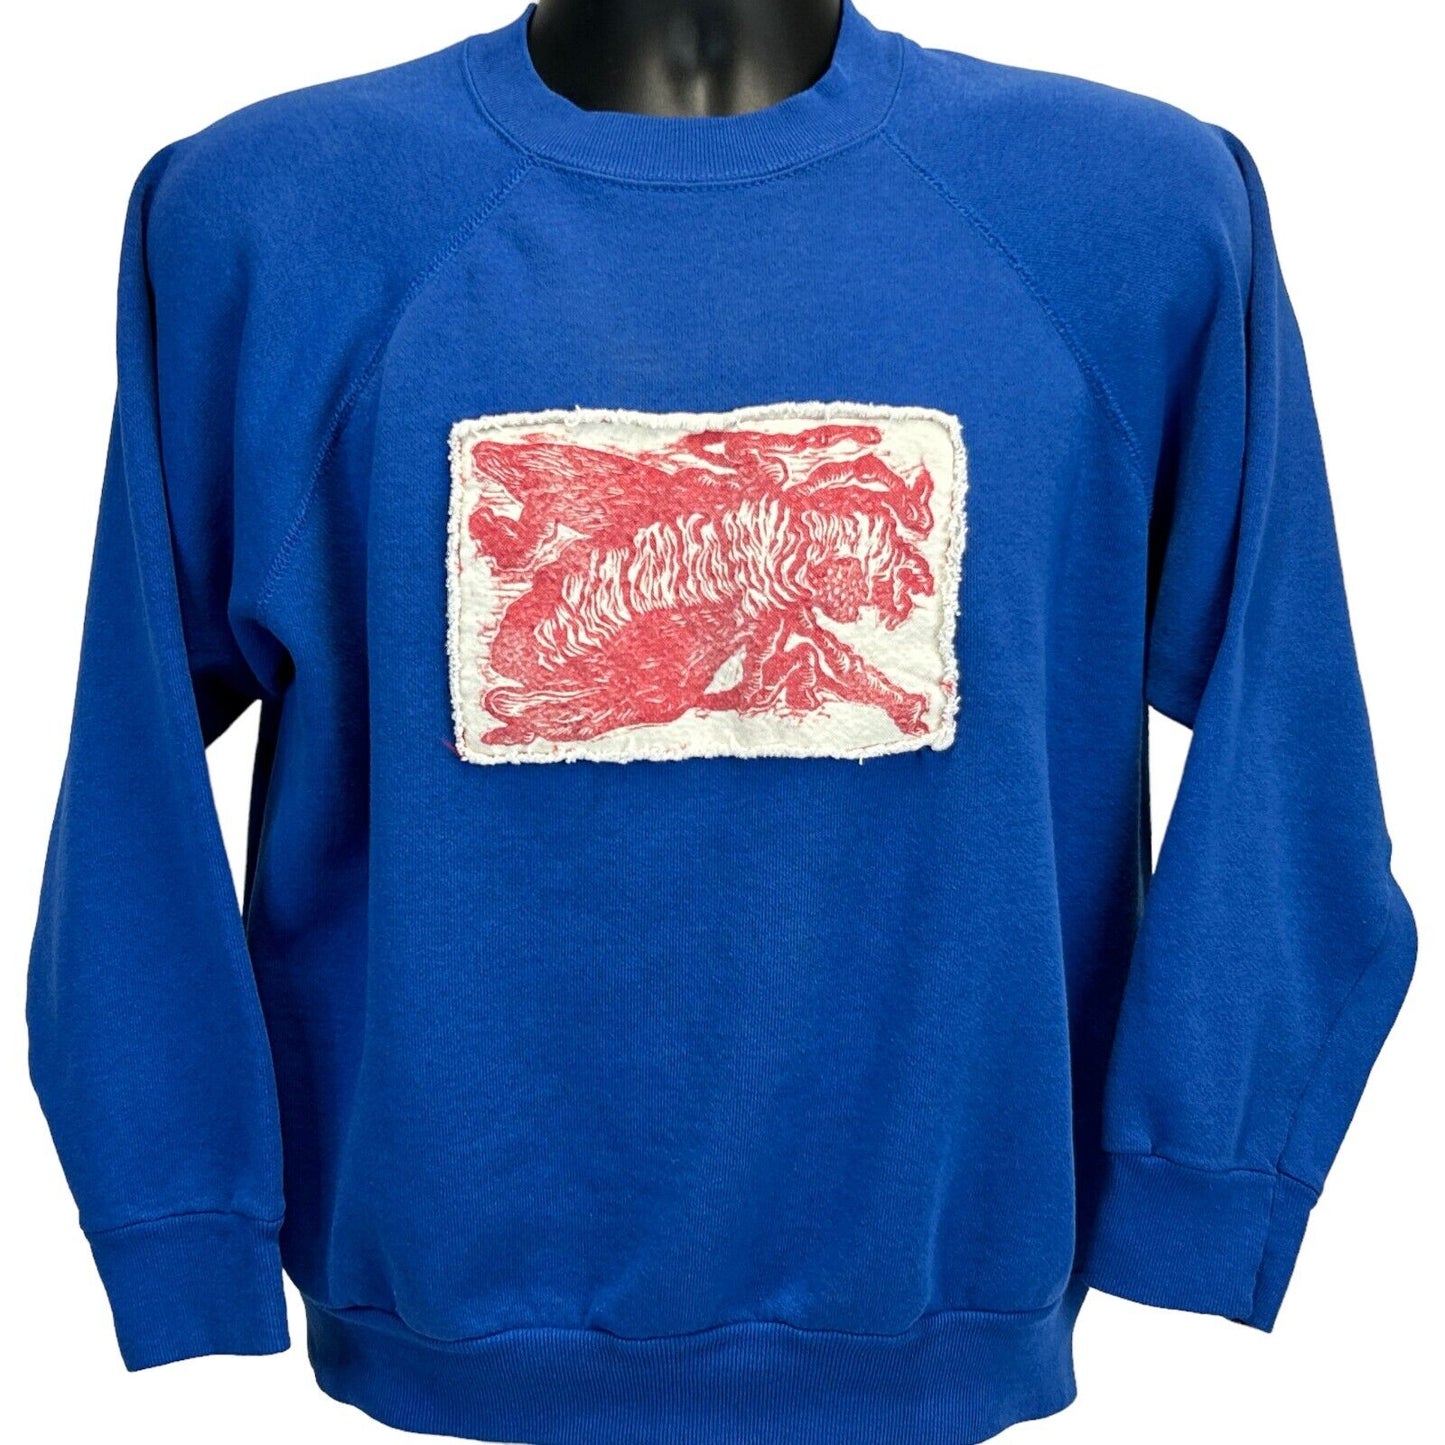 Artistic Creepy Fly Vintage 90s Sweatshirt Art Streetwear Blue USA Made Medium